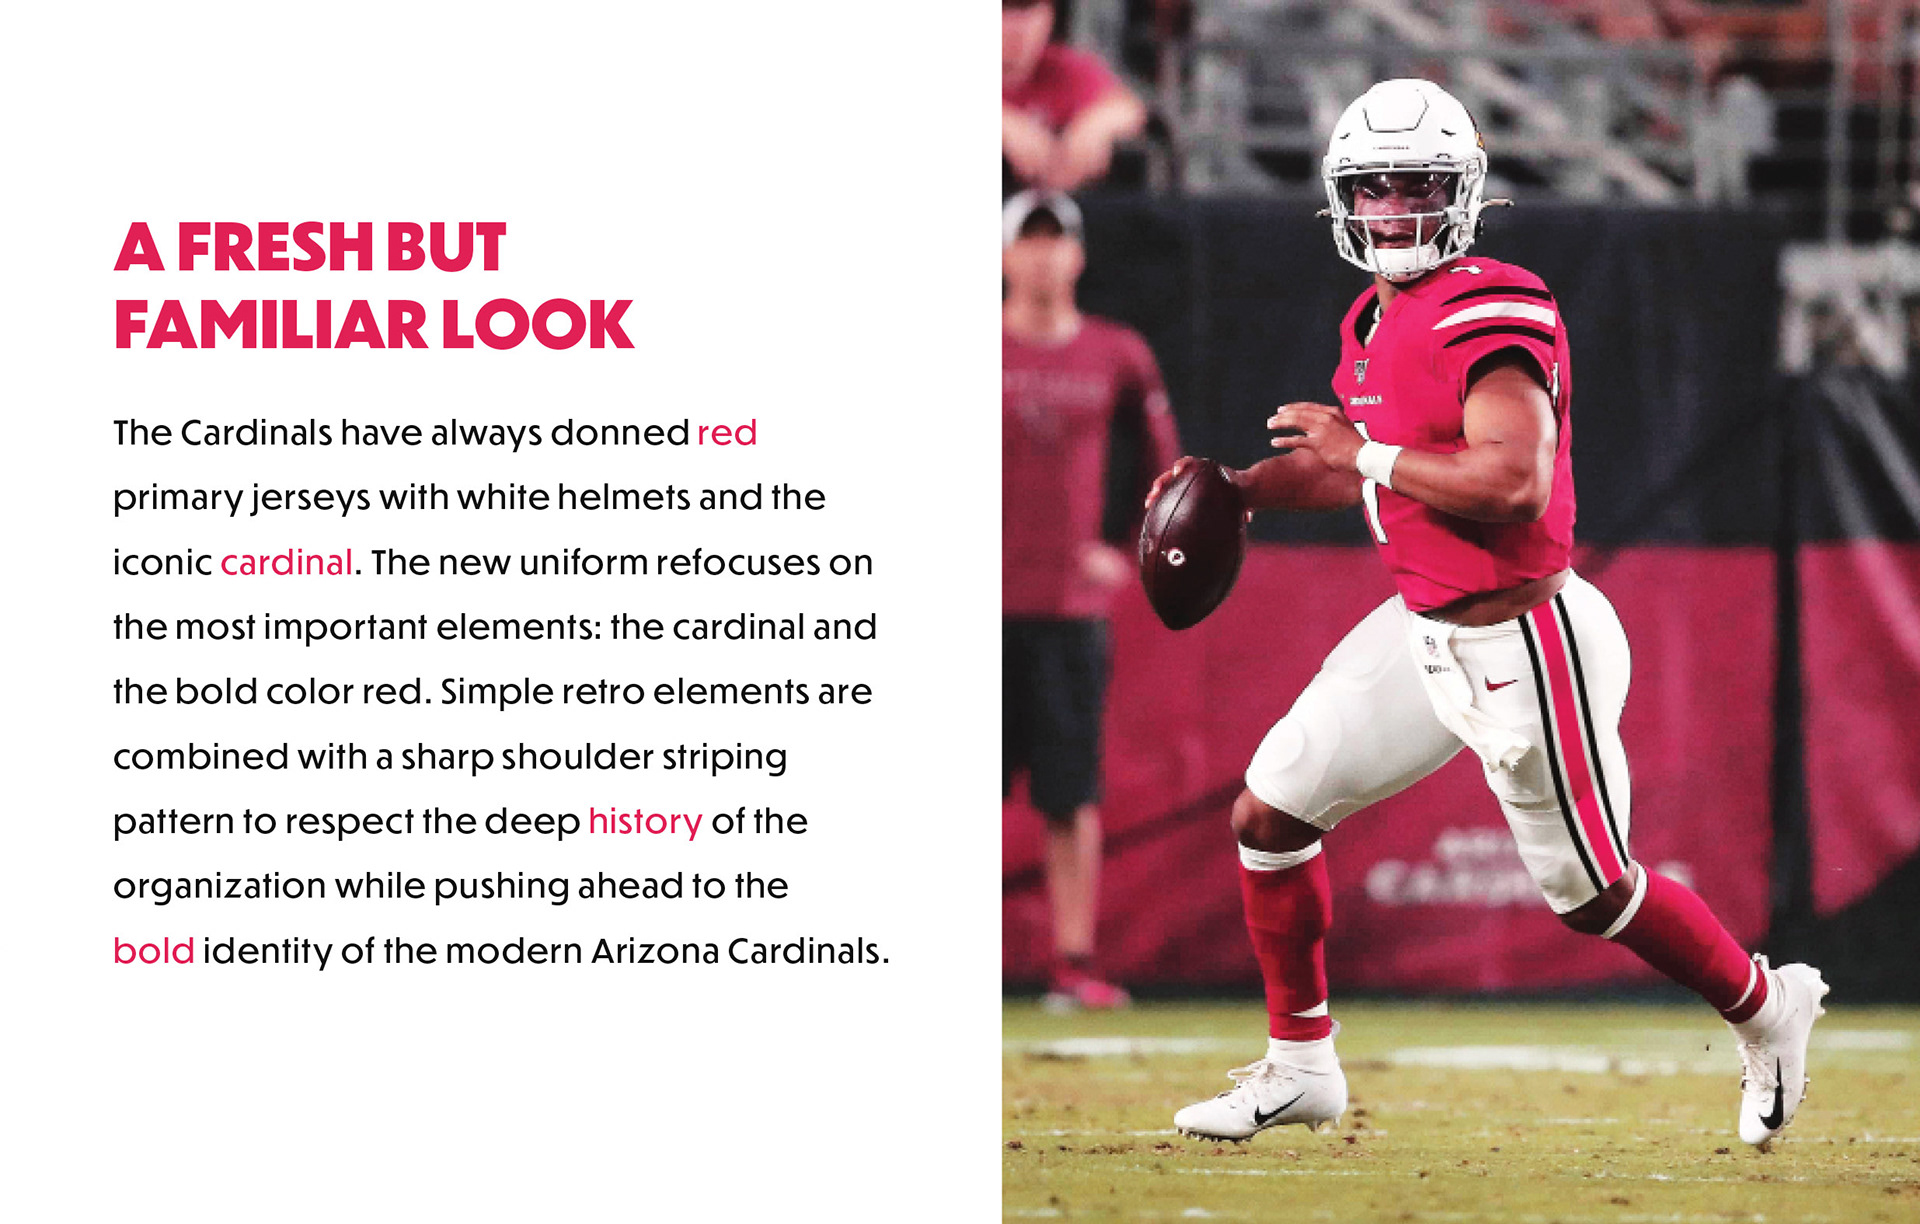 Jake Van Loh - Arizona Cardinals Rebrand Concept